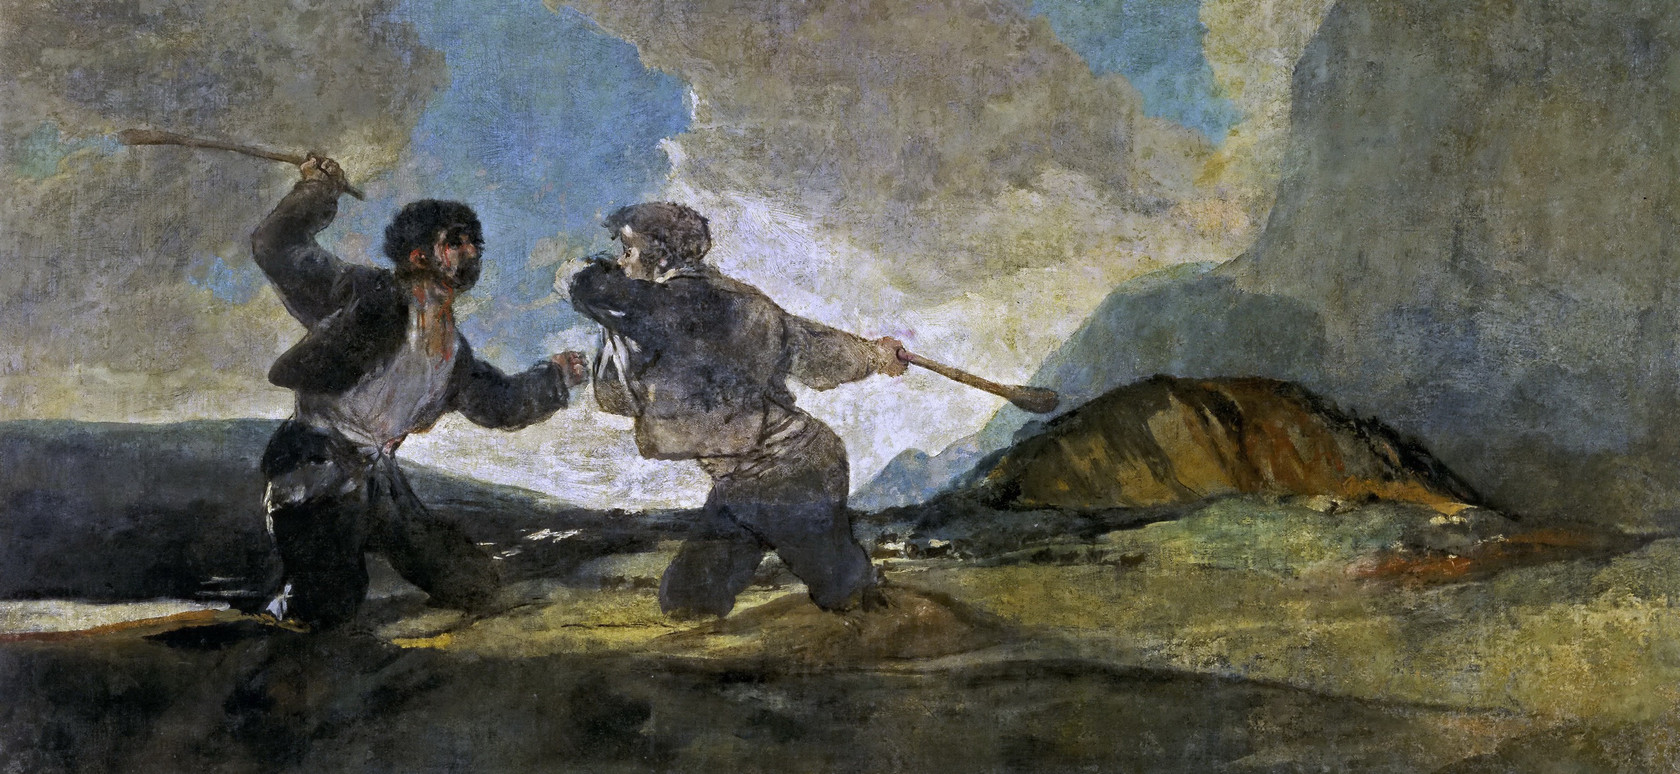 Картина - Дуэль с дубинами, 1820 - 1823 - Музей Прадо